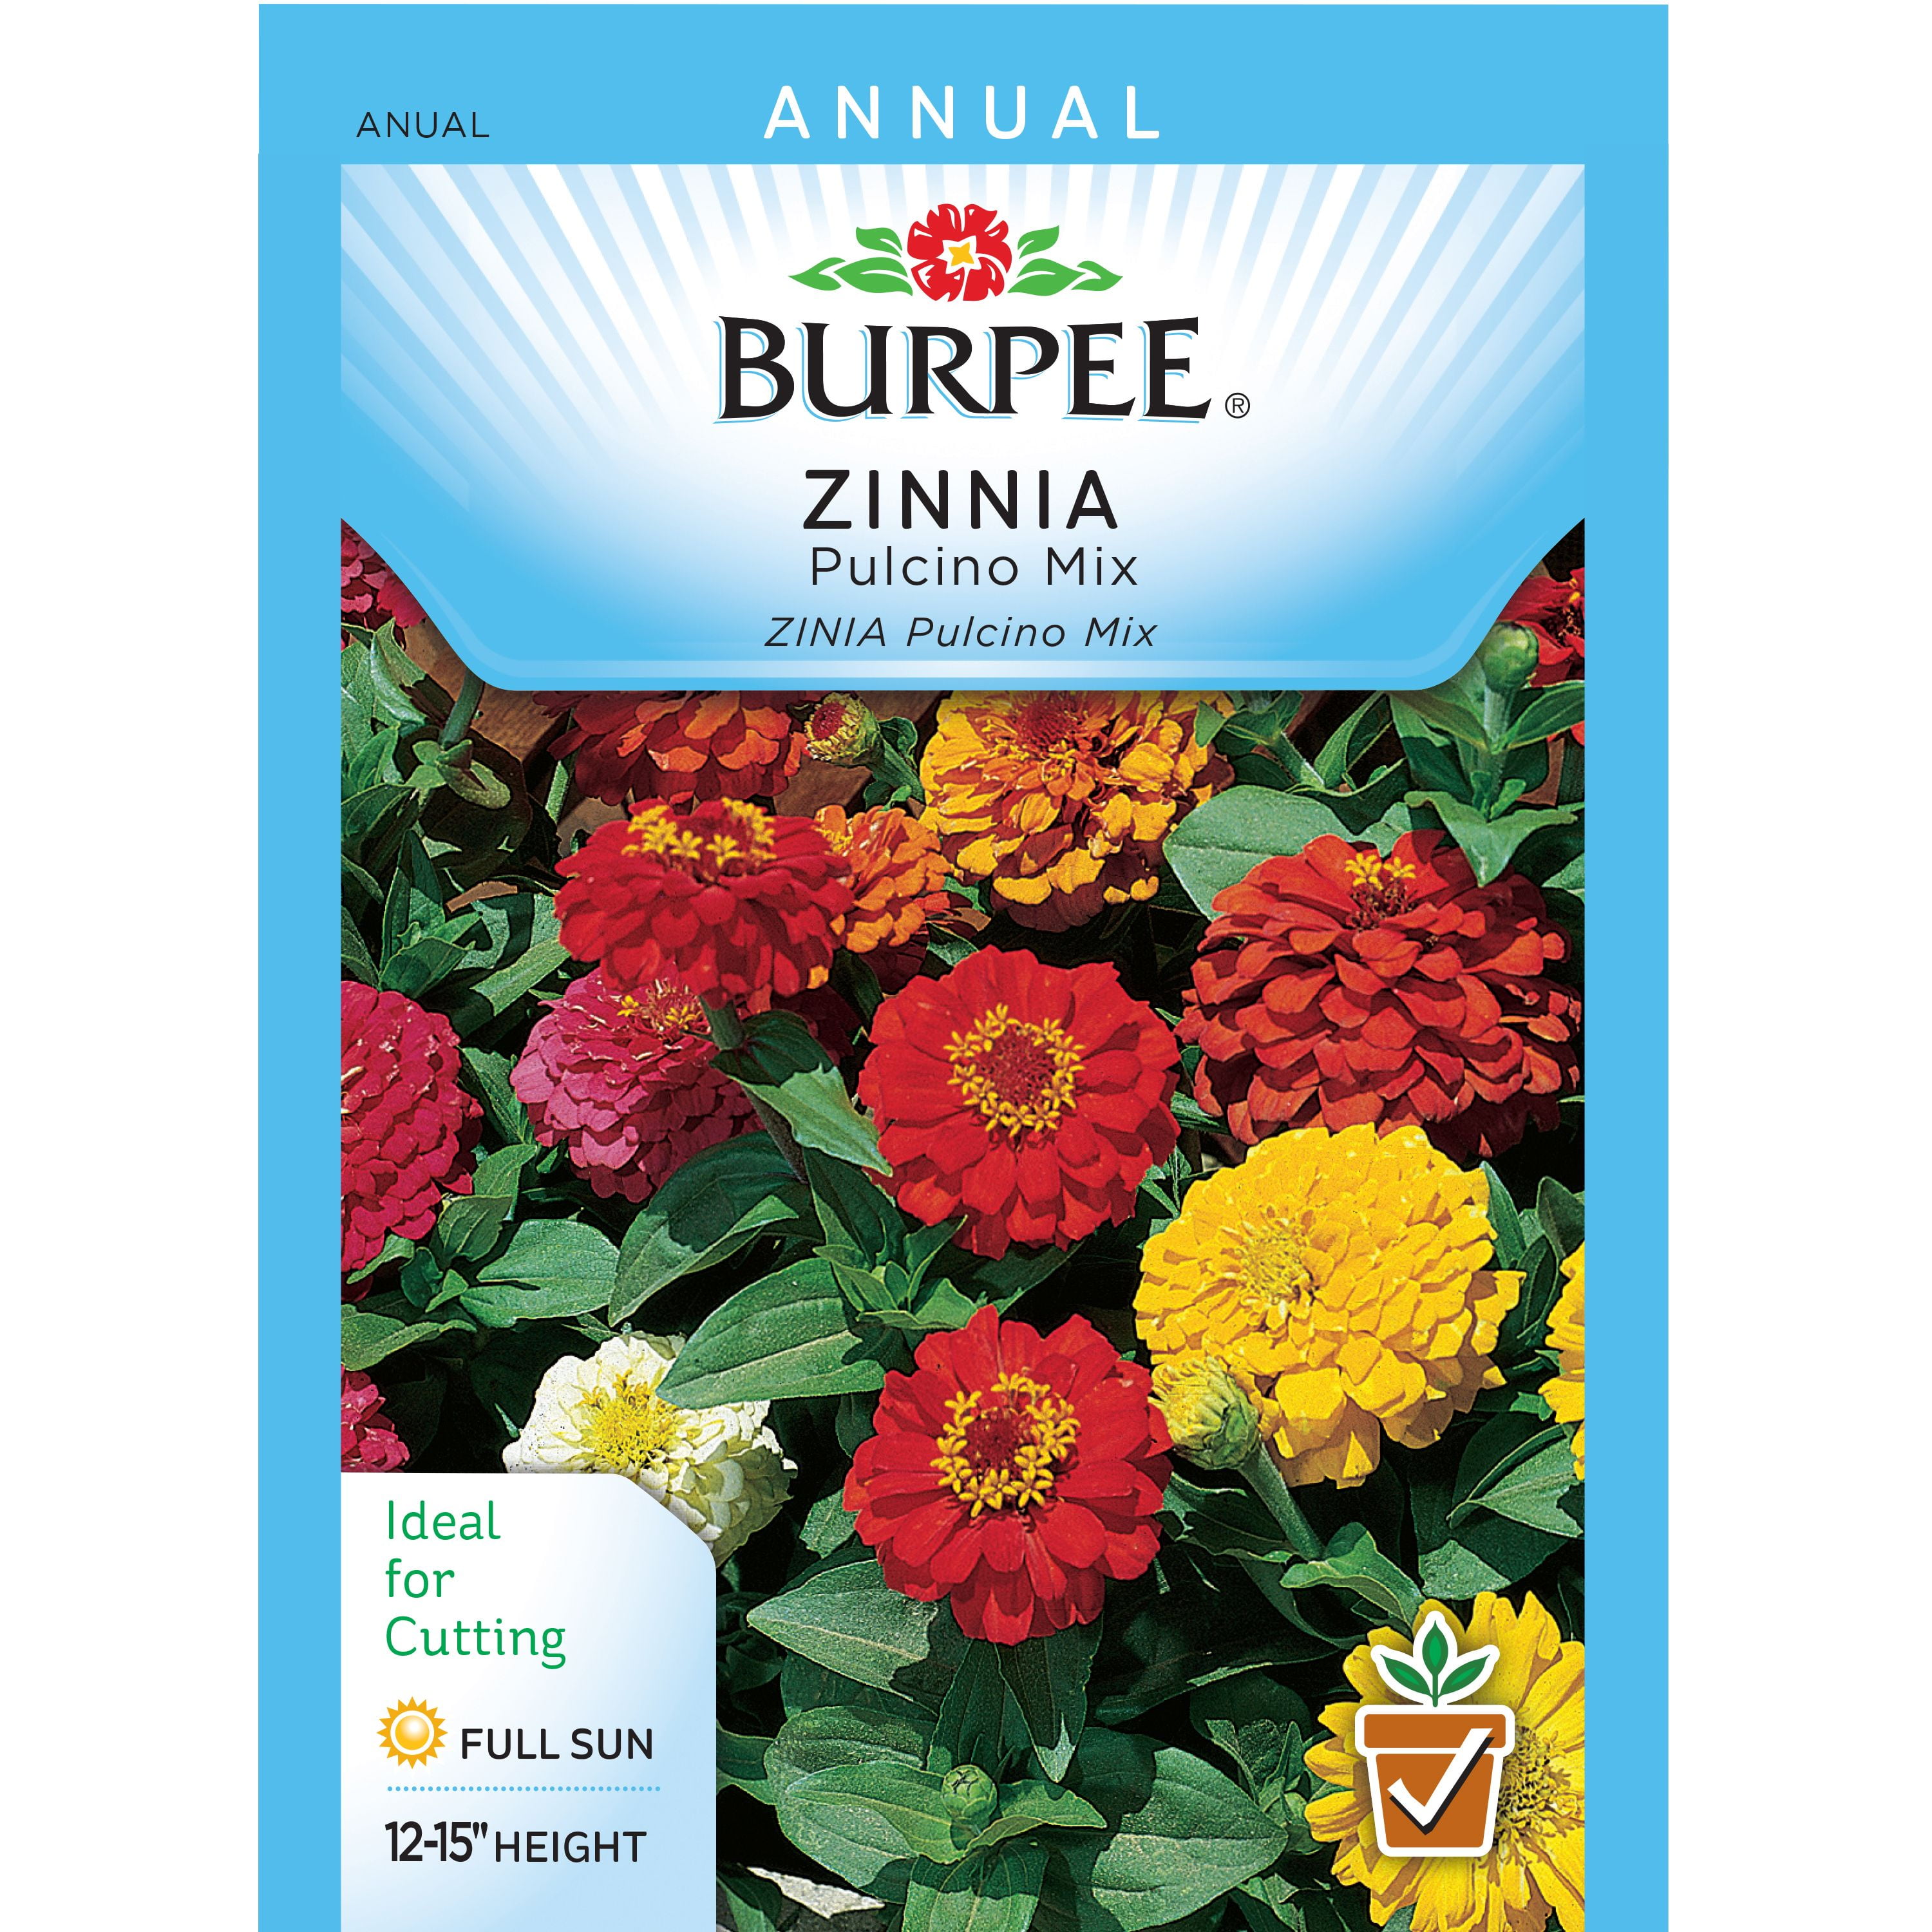 Burpee-Zinnia, Pulcino Mix Seed Packet - Walmart.com - Walmart.com